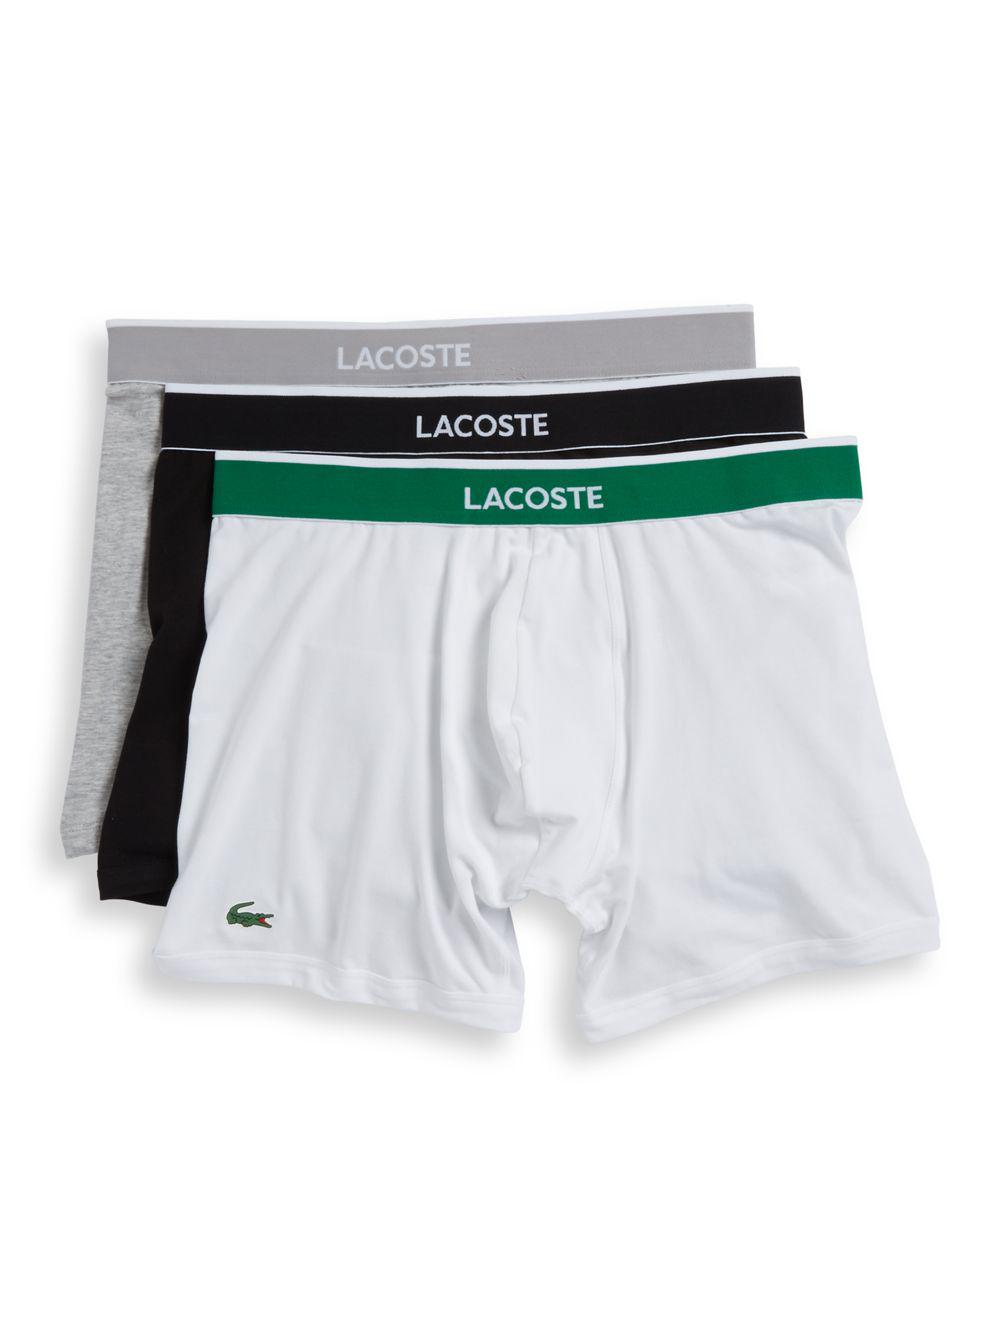 lacoste cotton stretch boxer briefs